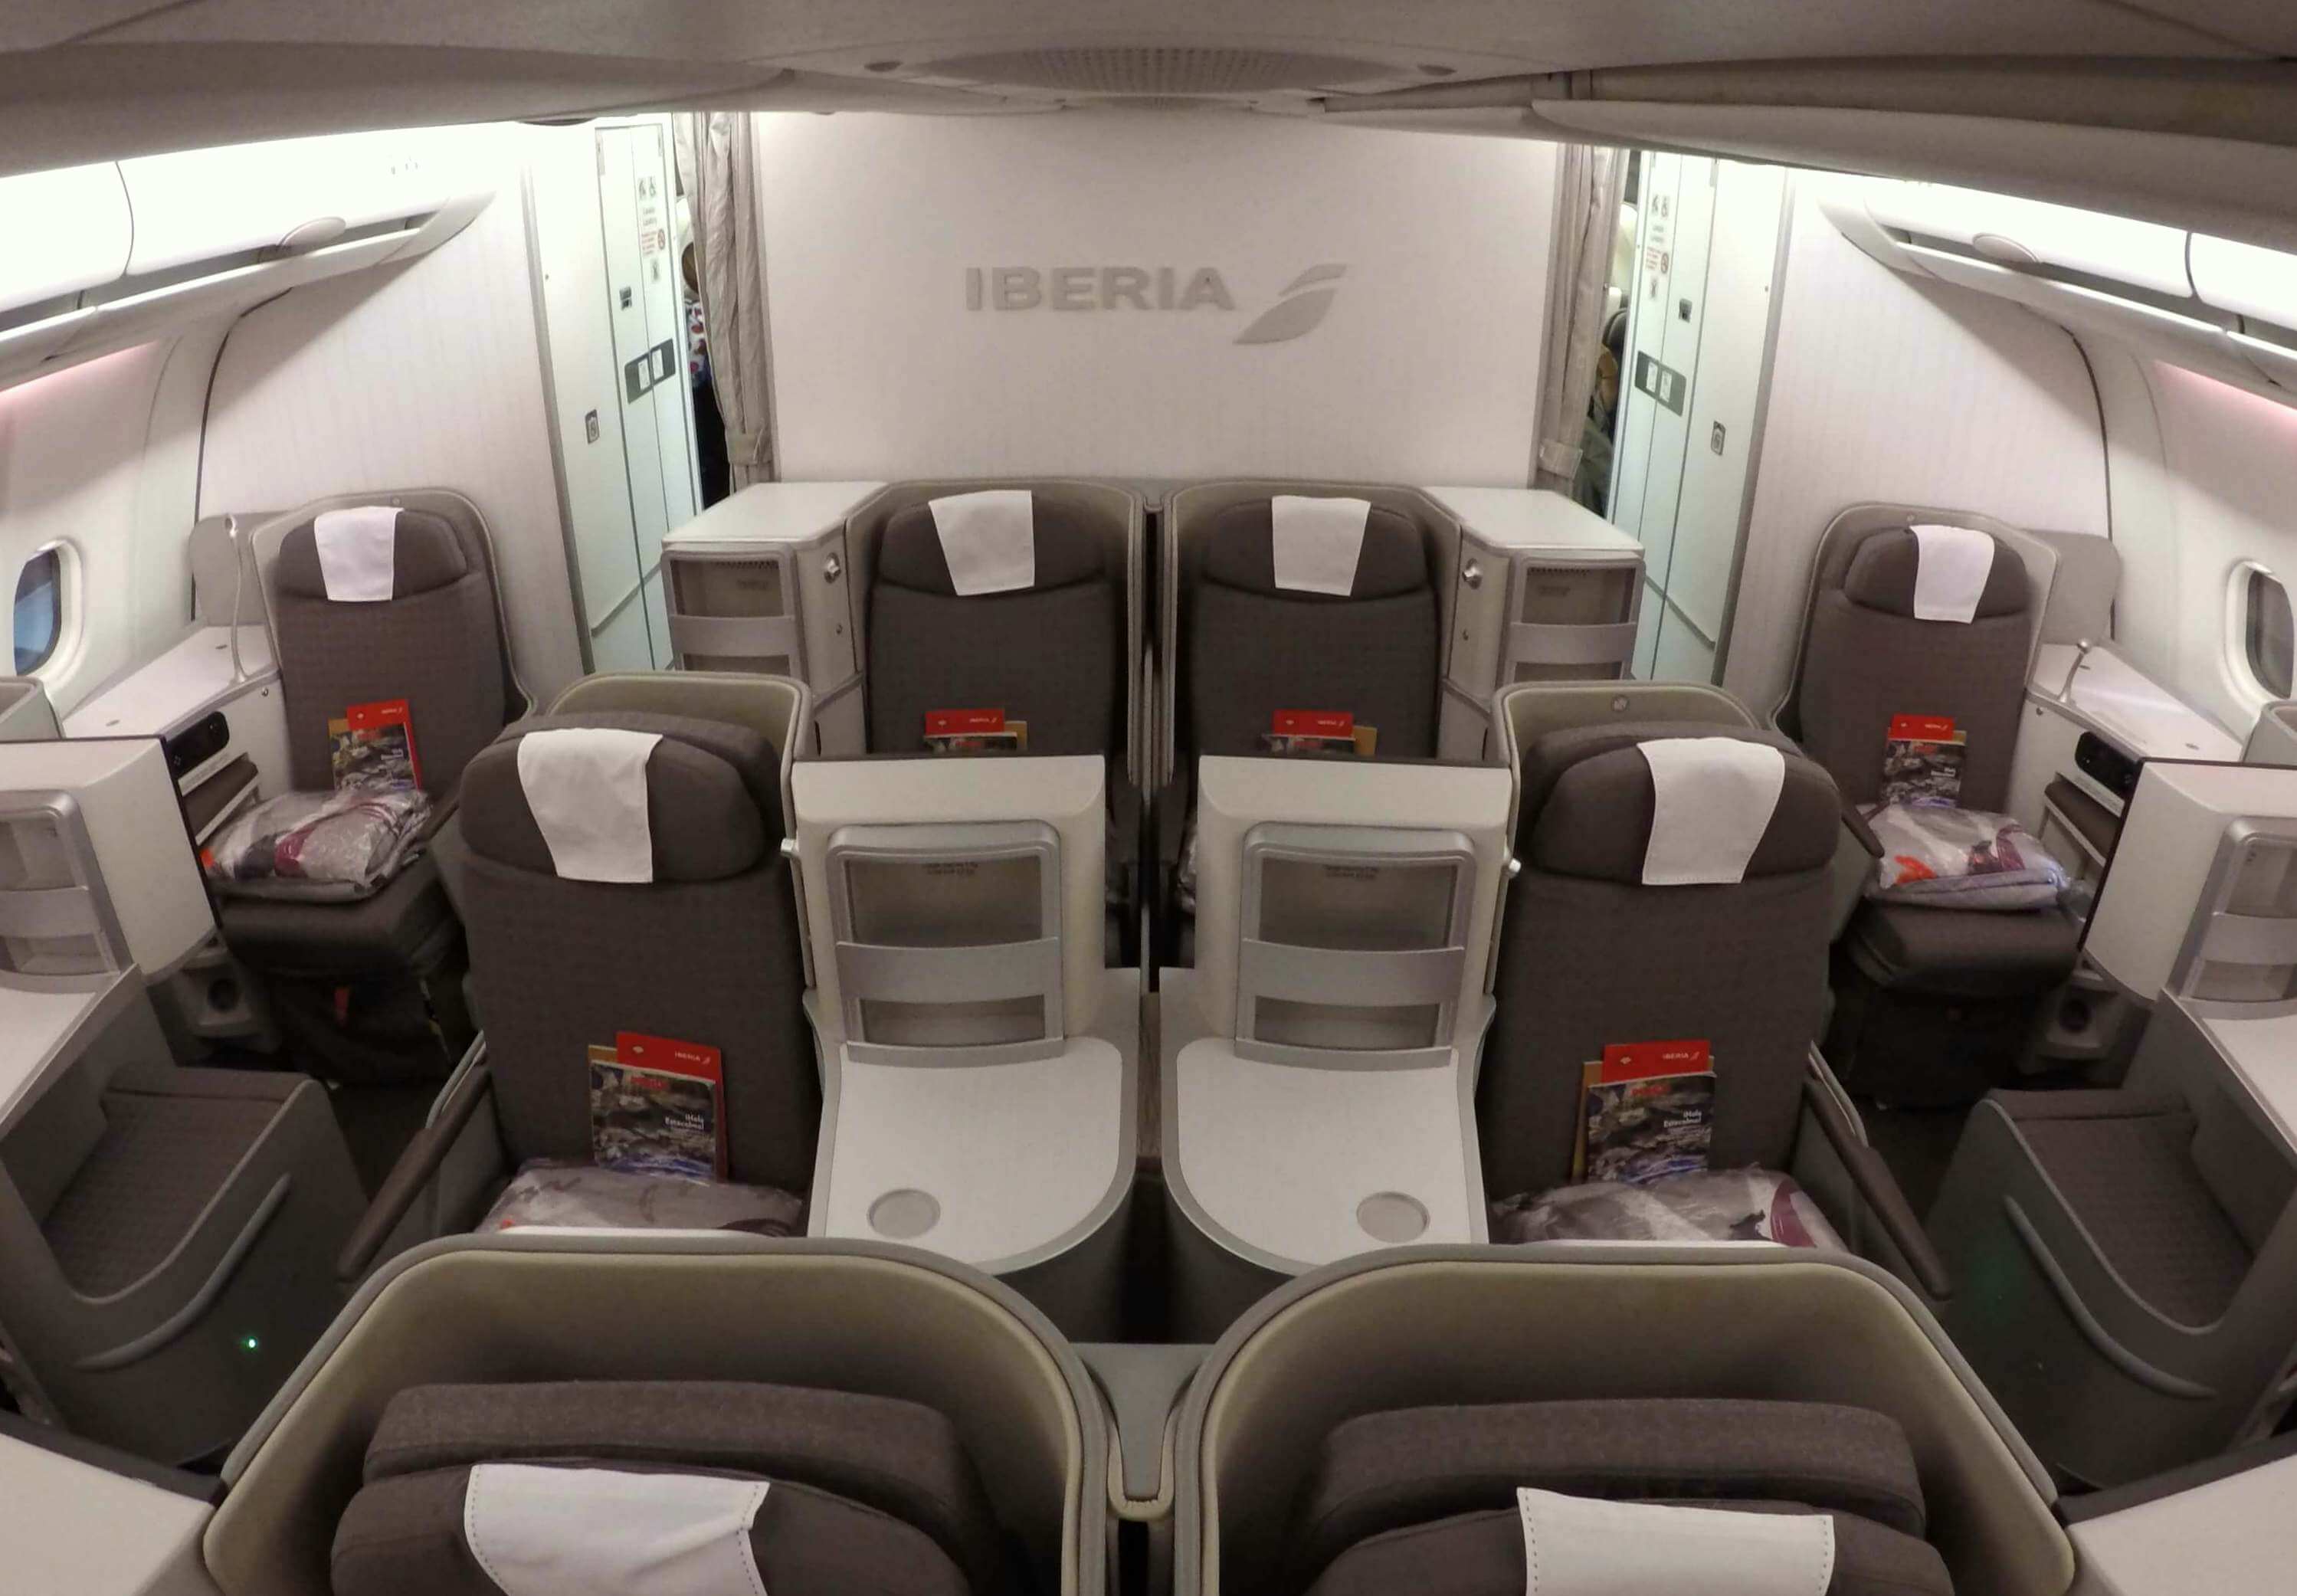 Iberia Business Class airbus 340-600, asientos individuales